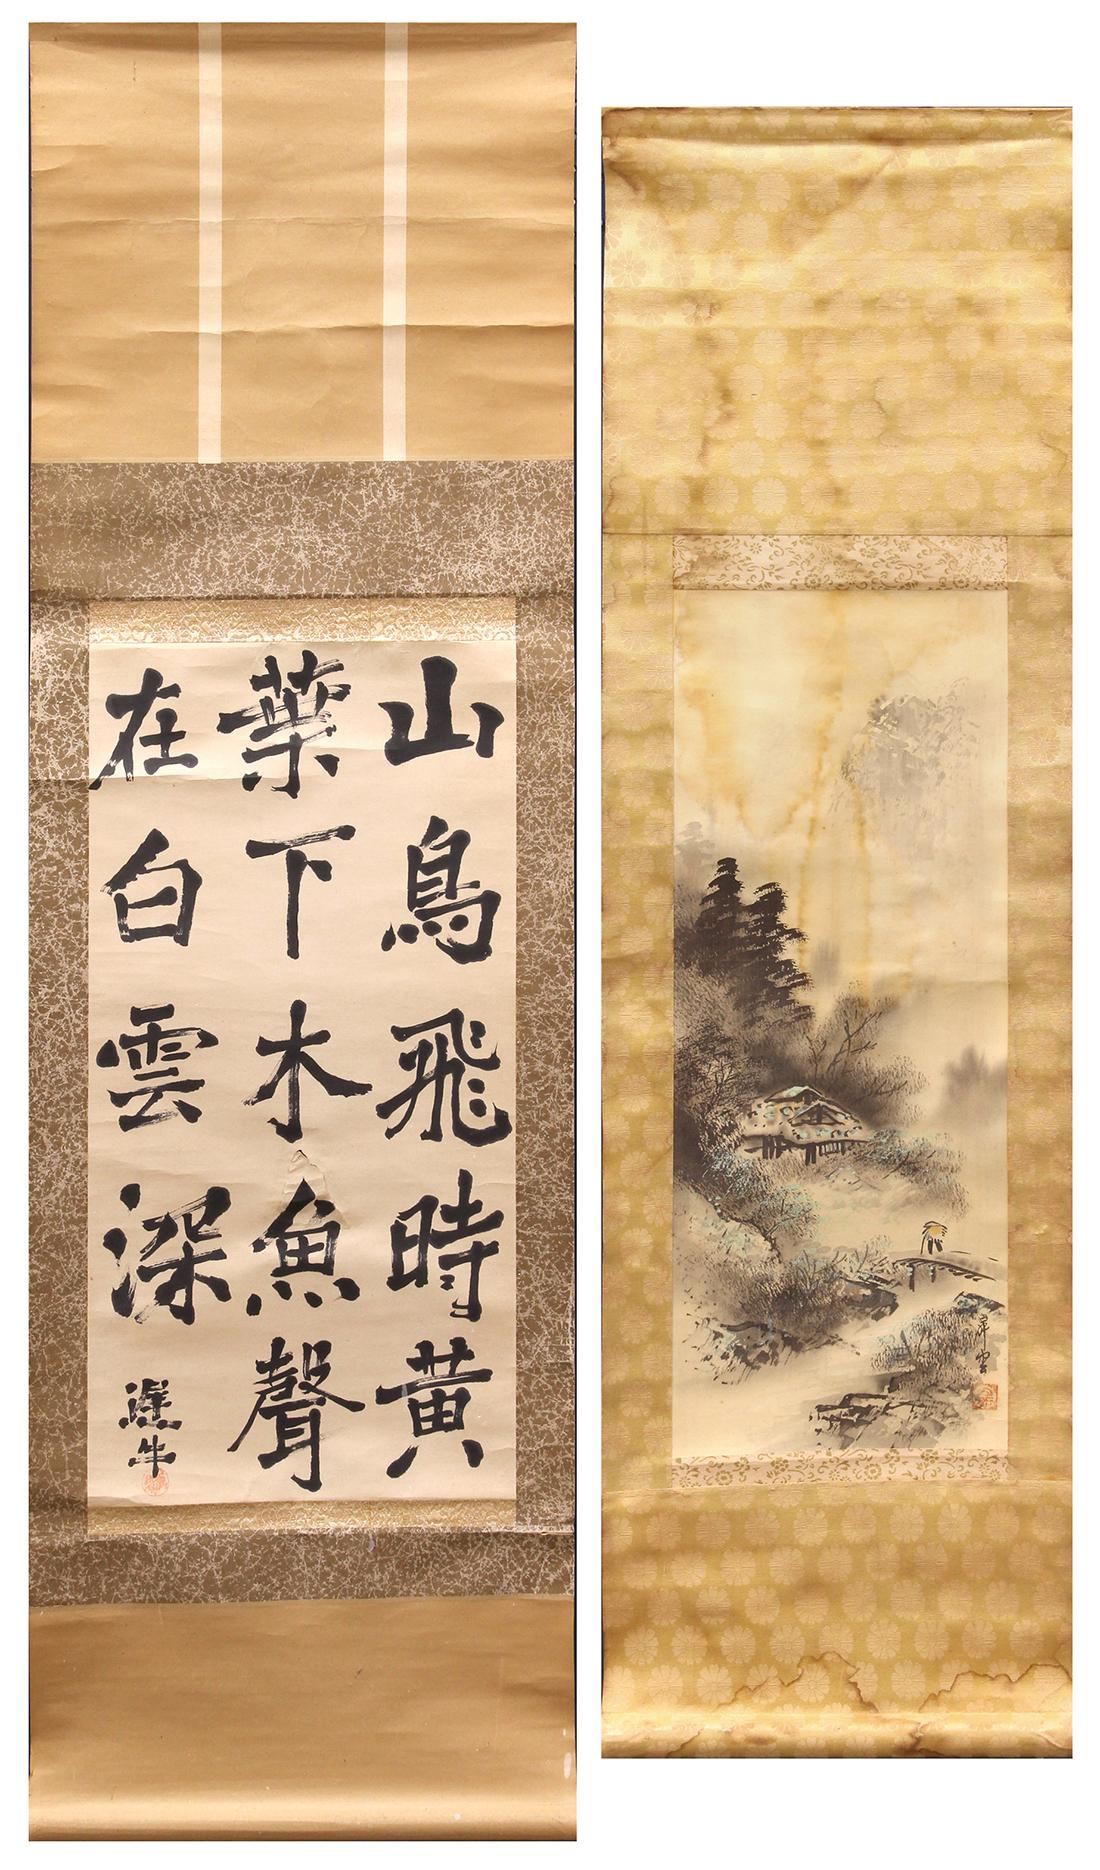 Japanese Scrolls